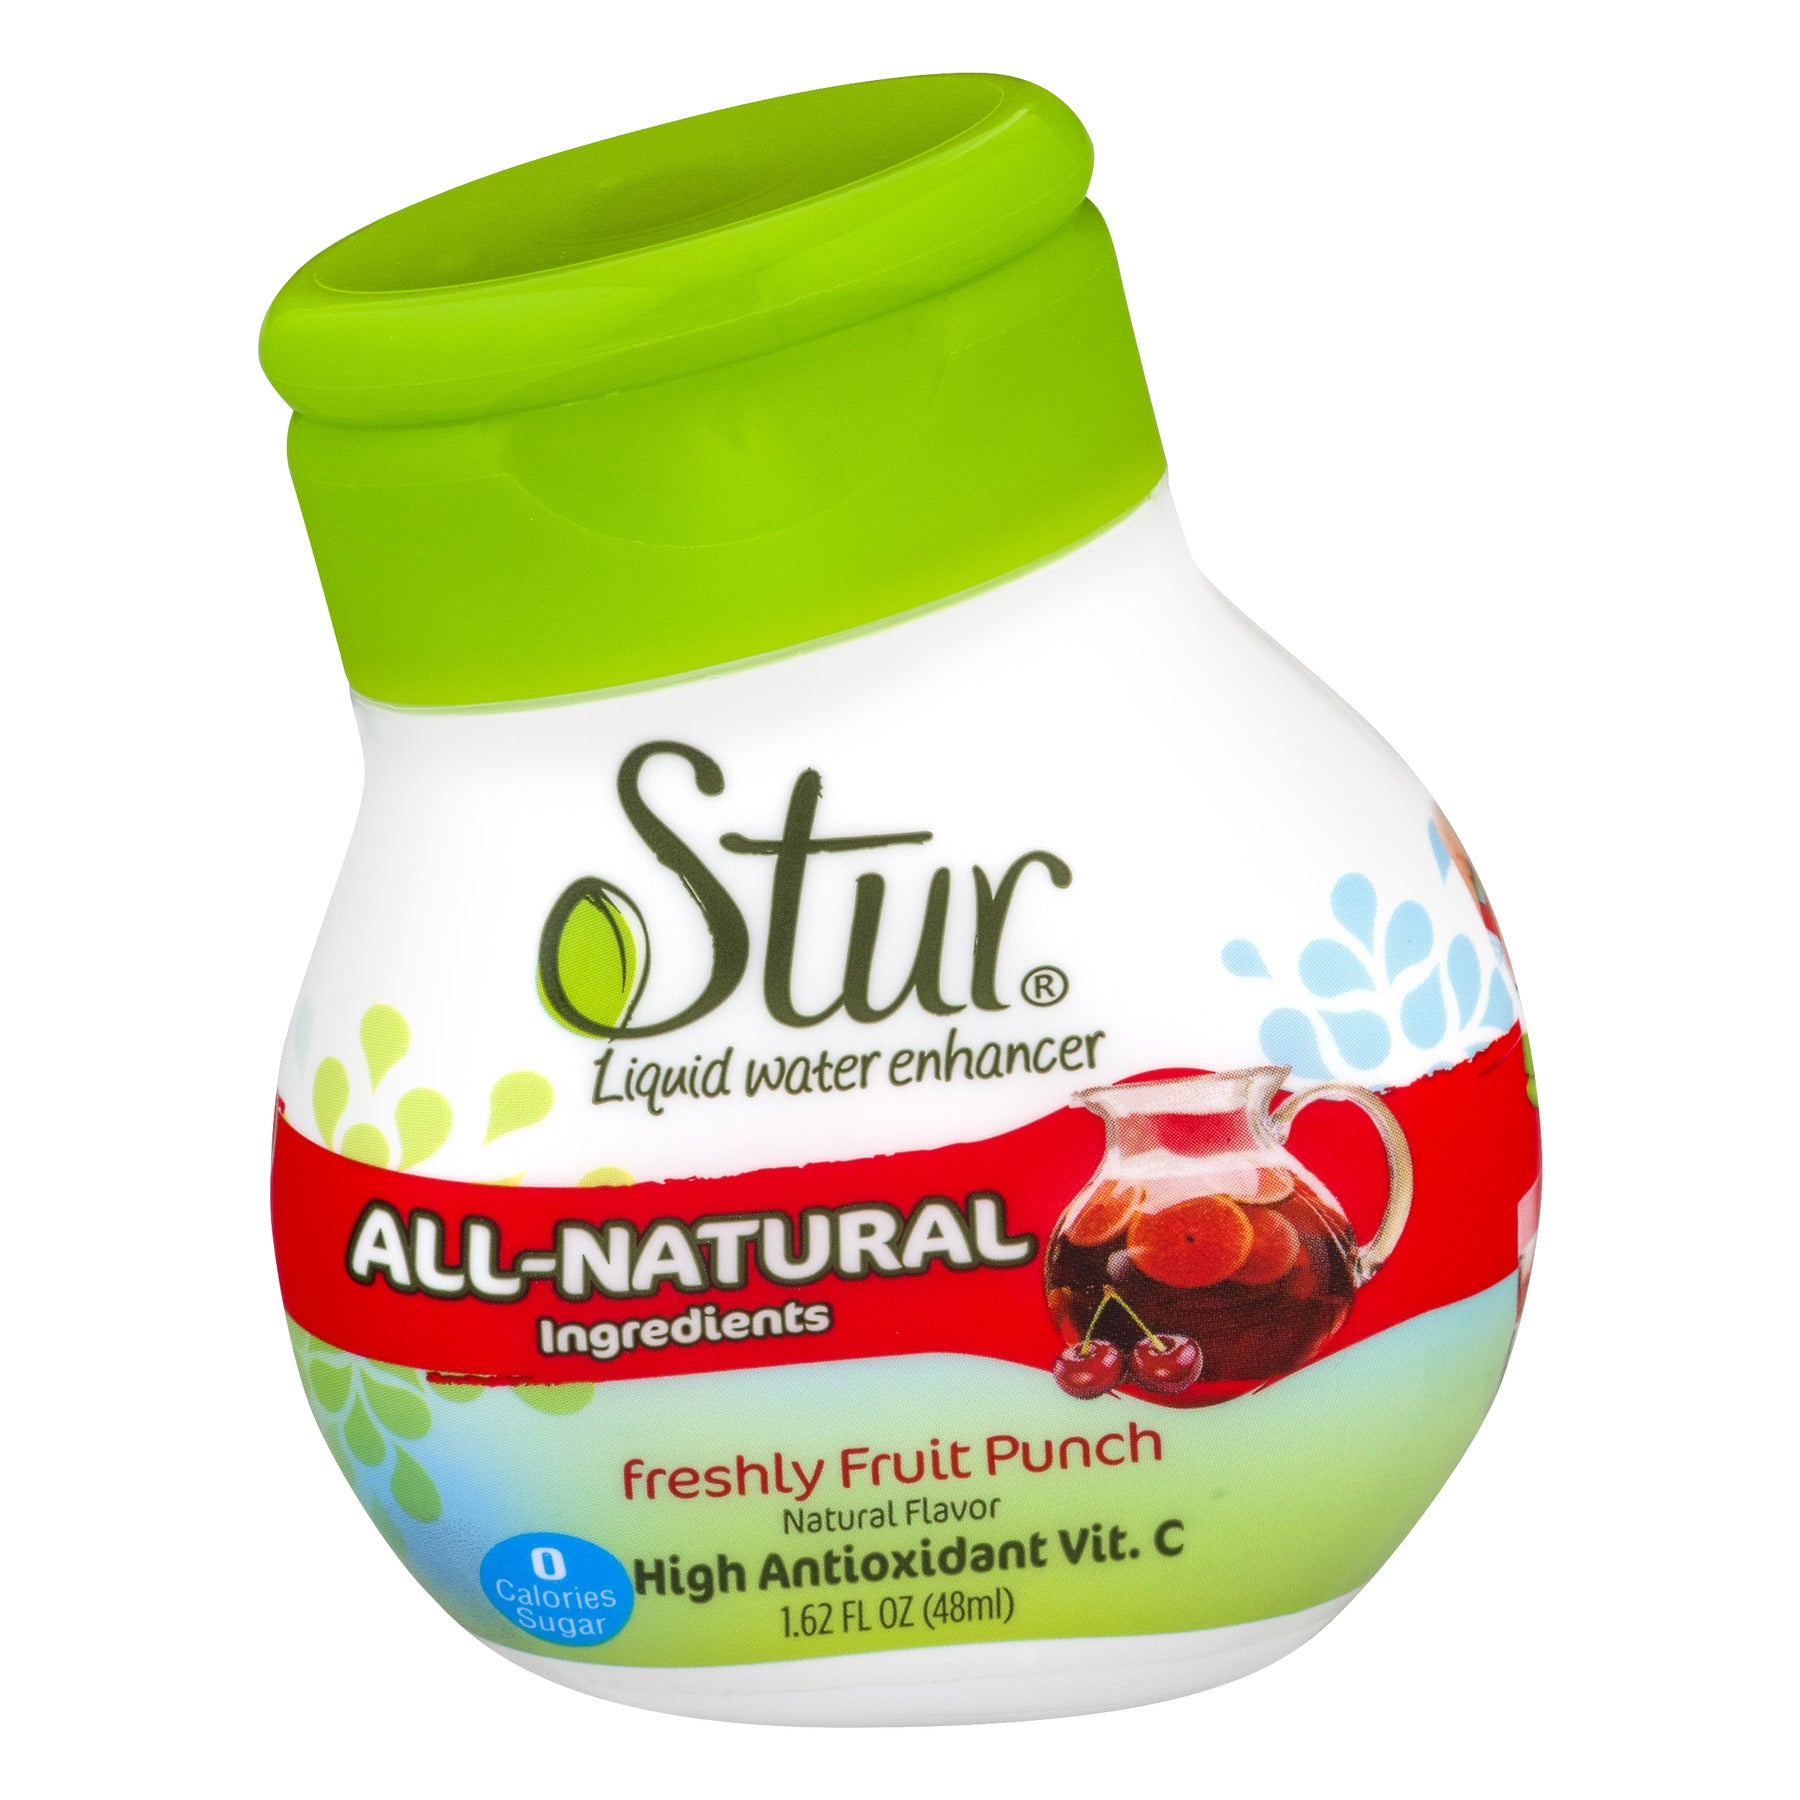 Stur Liquid Water Enhancer Freshly Fruit Punch, 1.62 FL OZ